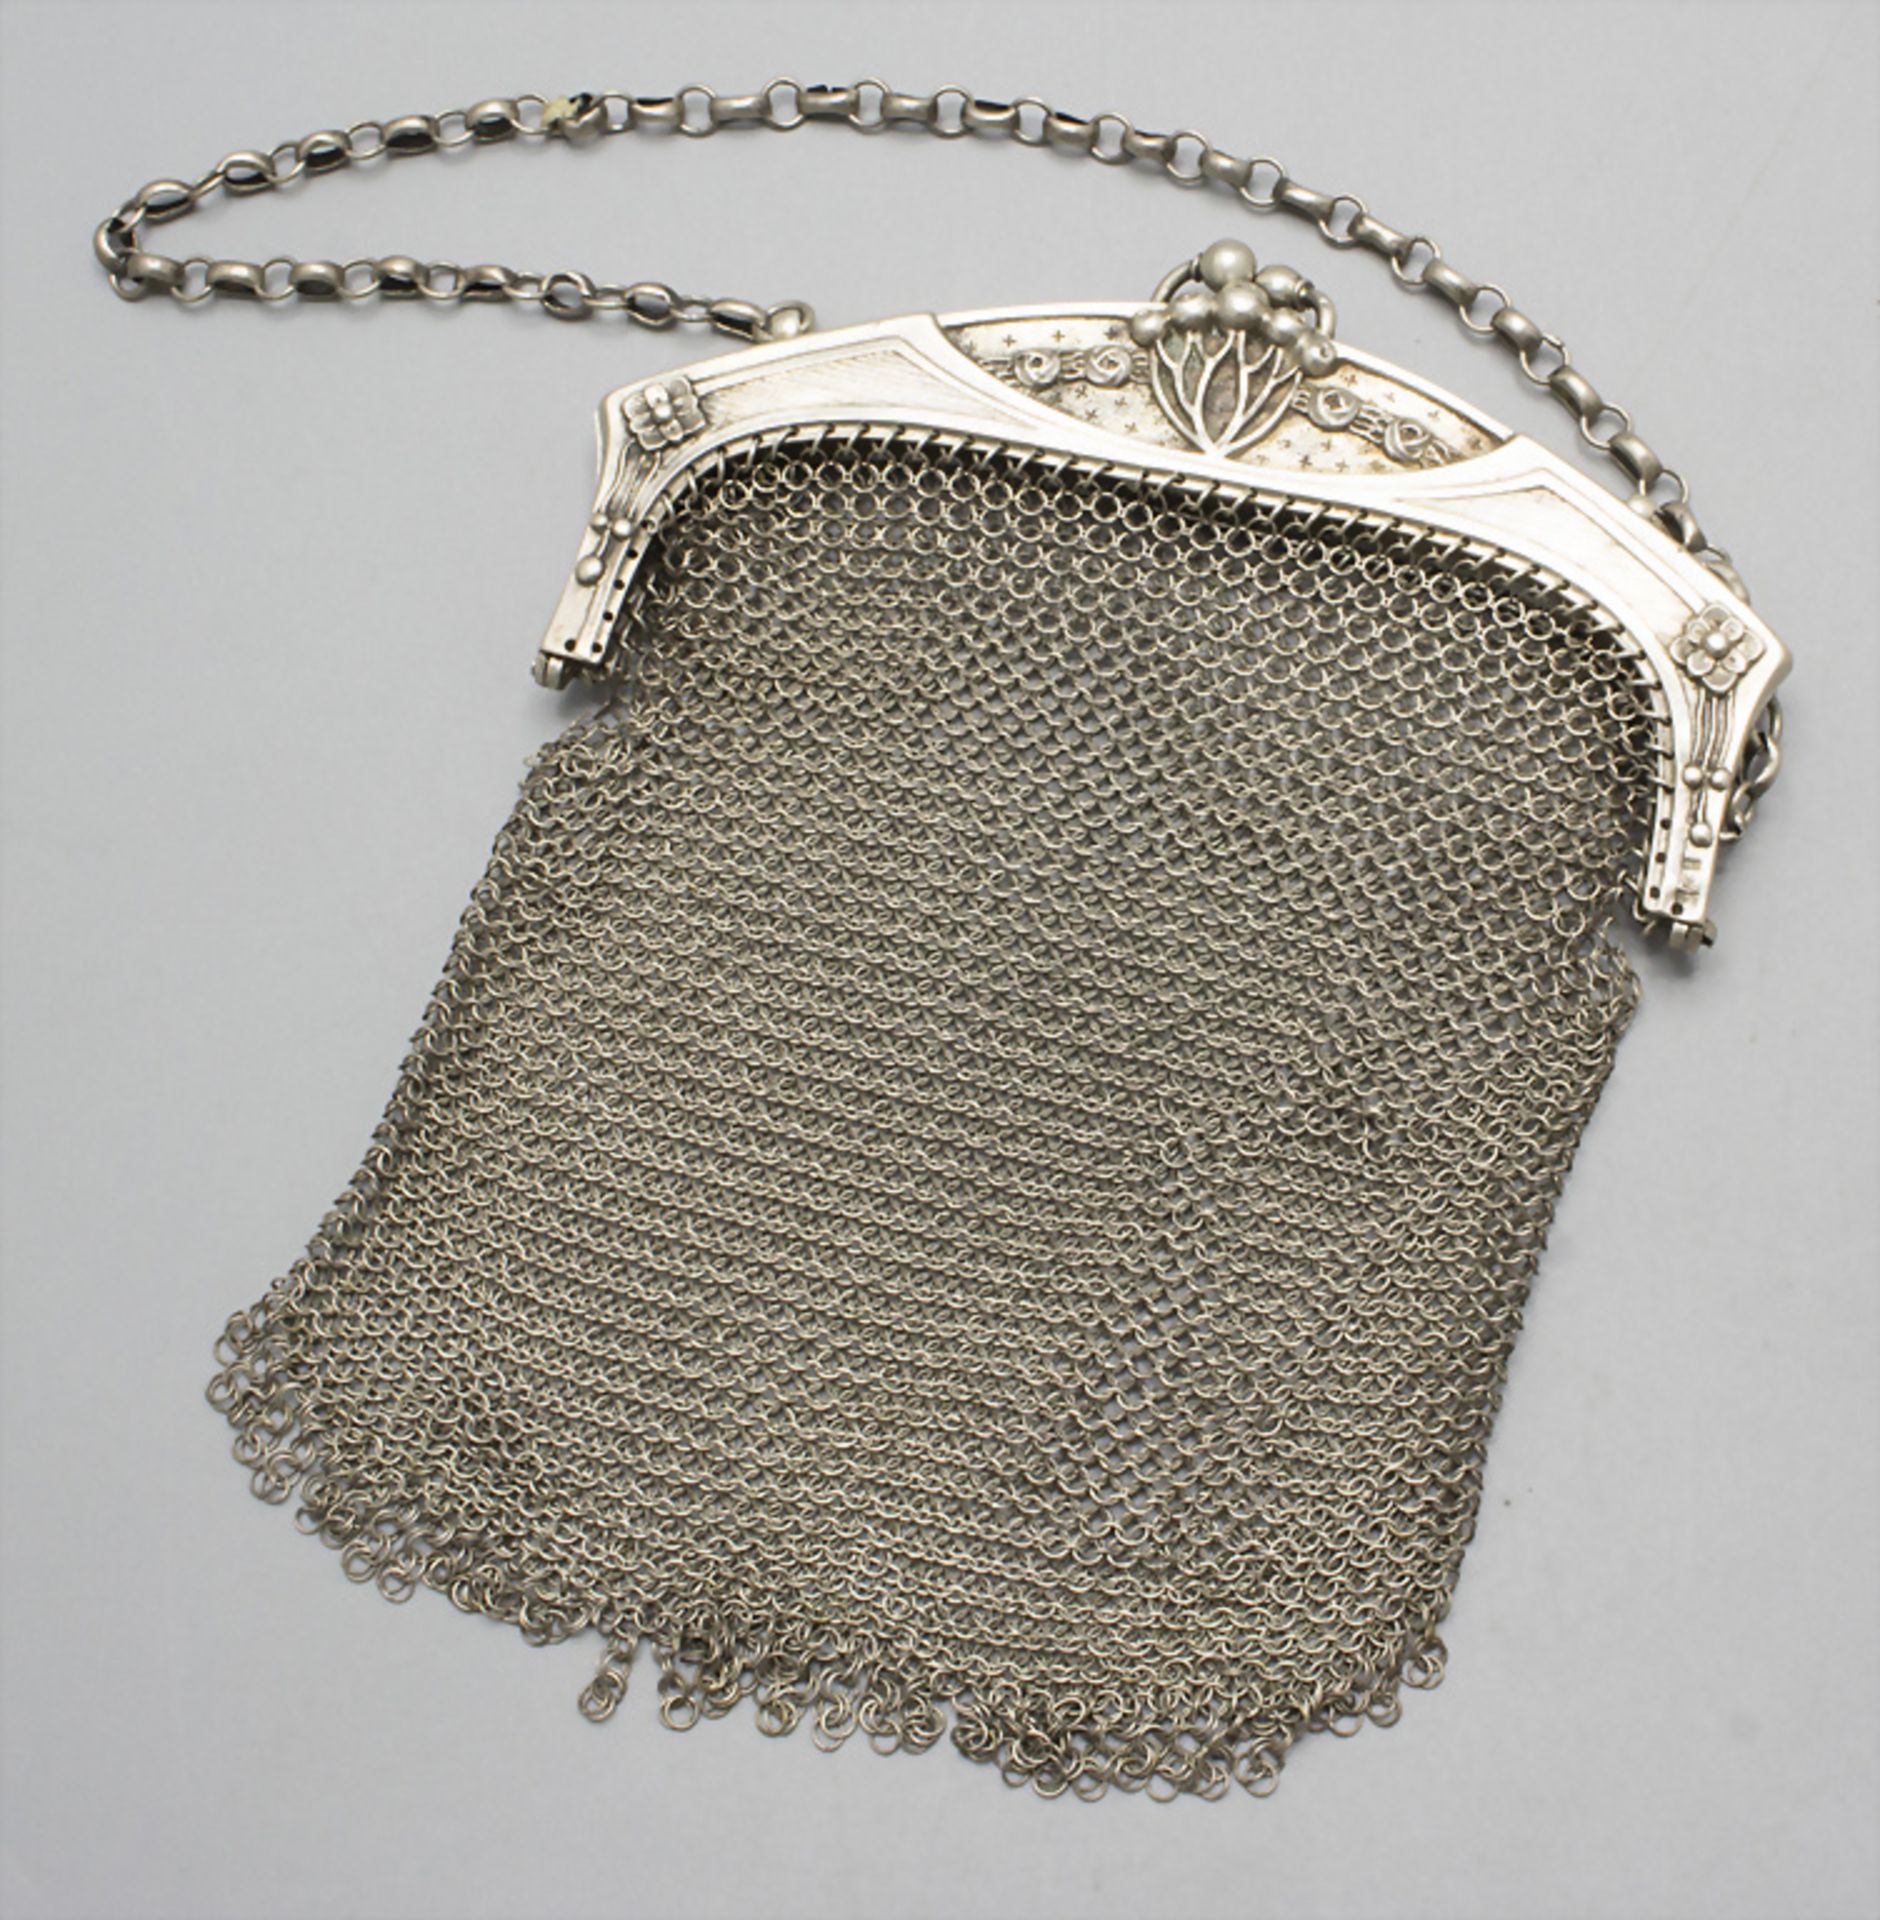 Jugendstil Abendtasche / A silver Art Nouveau evening purse, wohl Pforzheim, um 1900 - Image 2 of 5